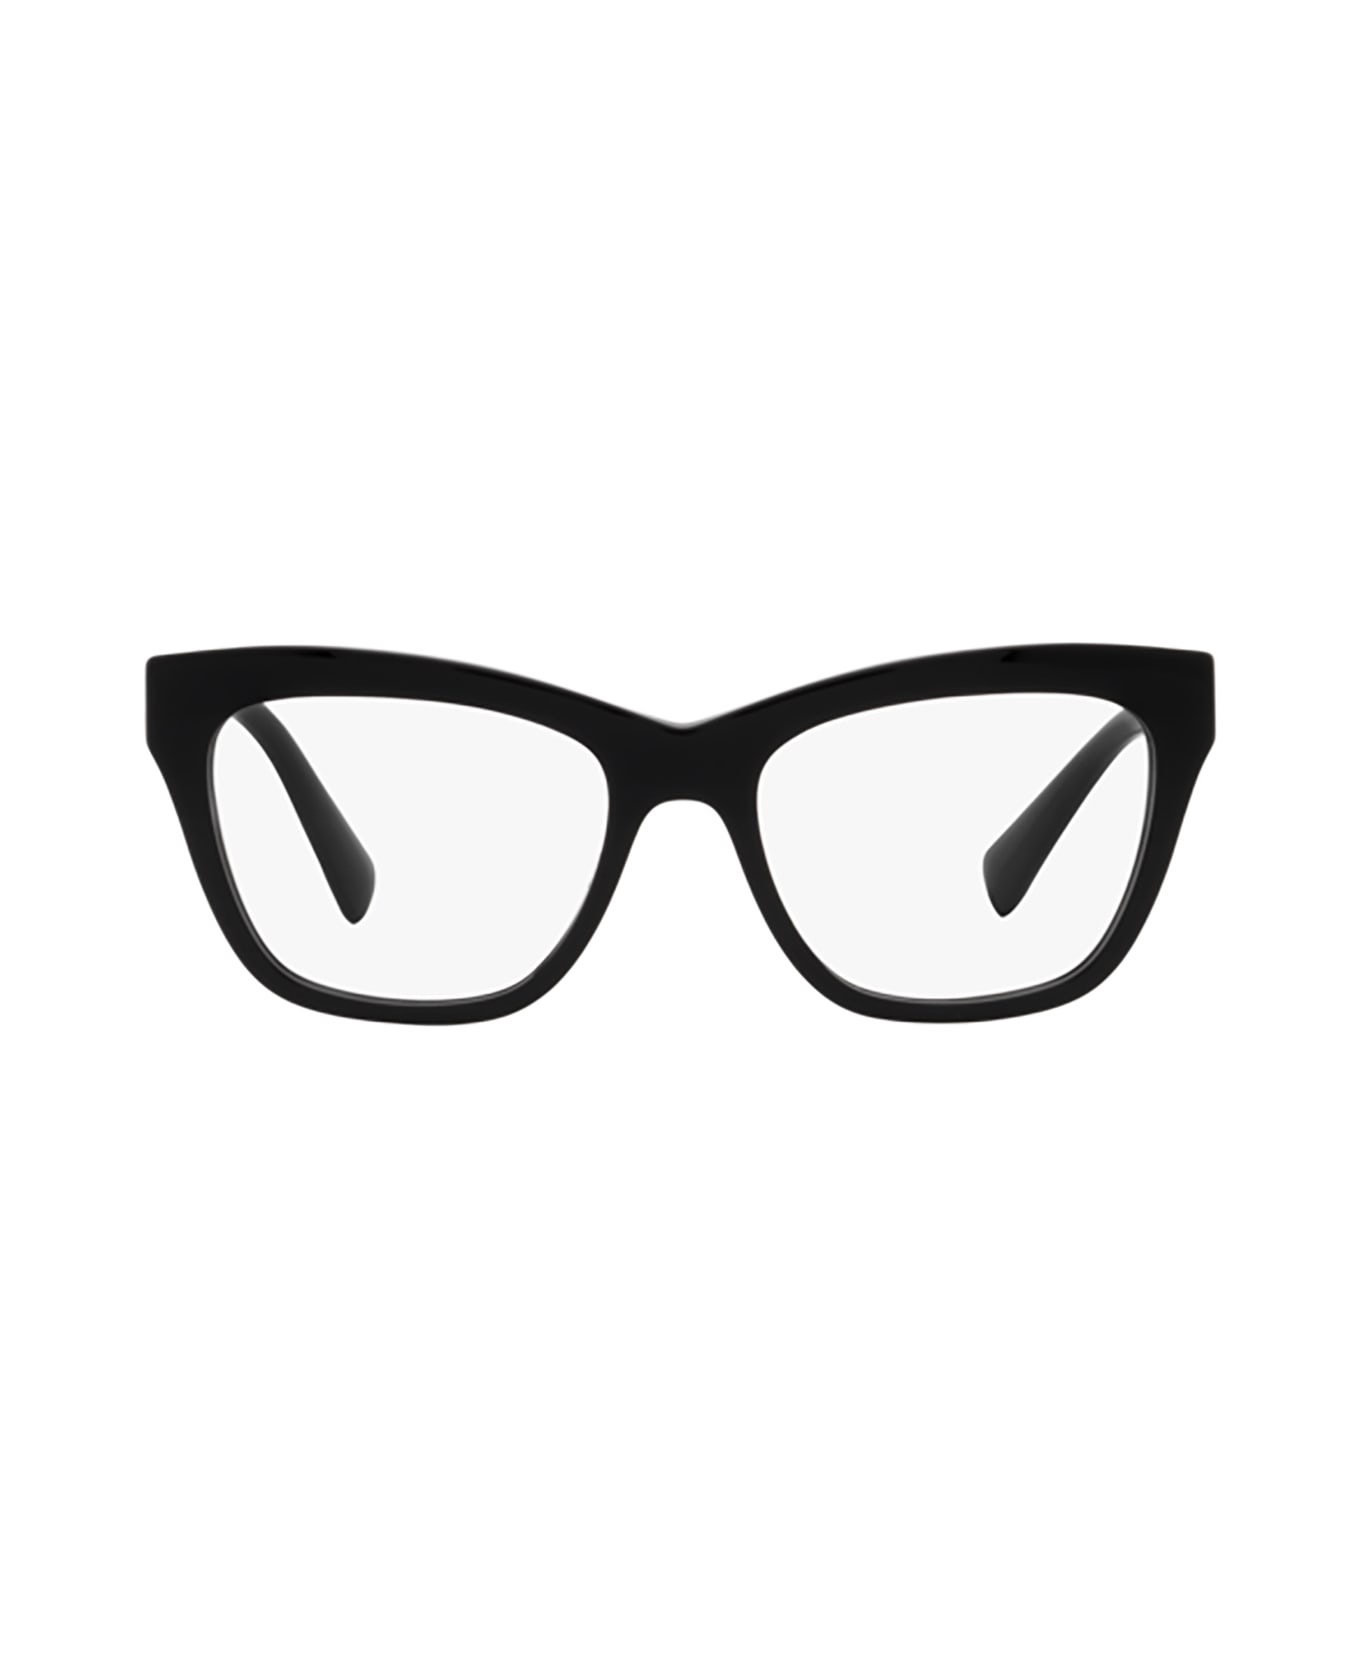 Miu Miu Eyewear Mu 03uv Black Glasses - Black